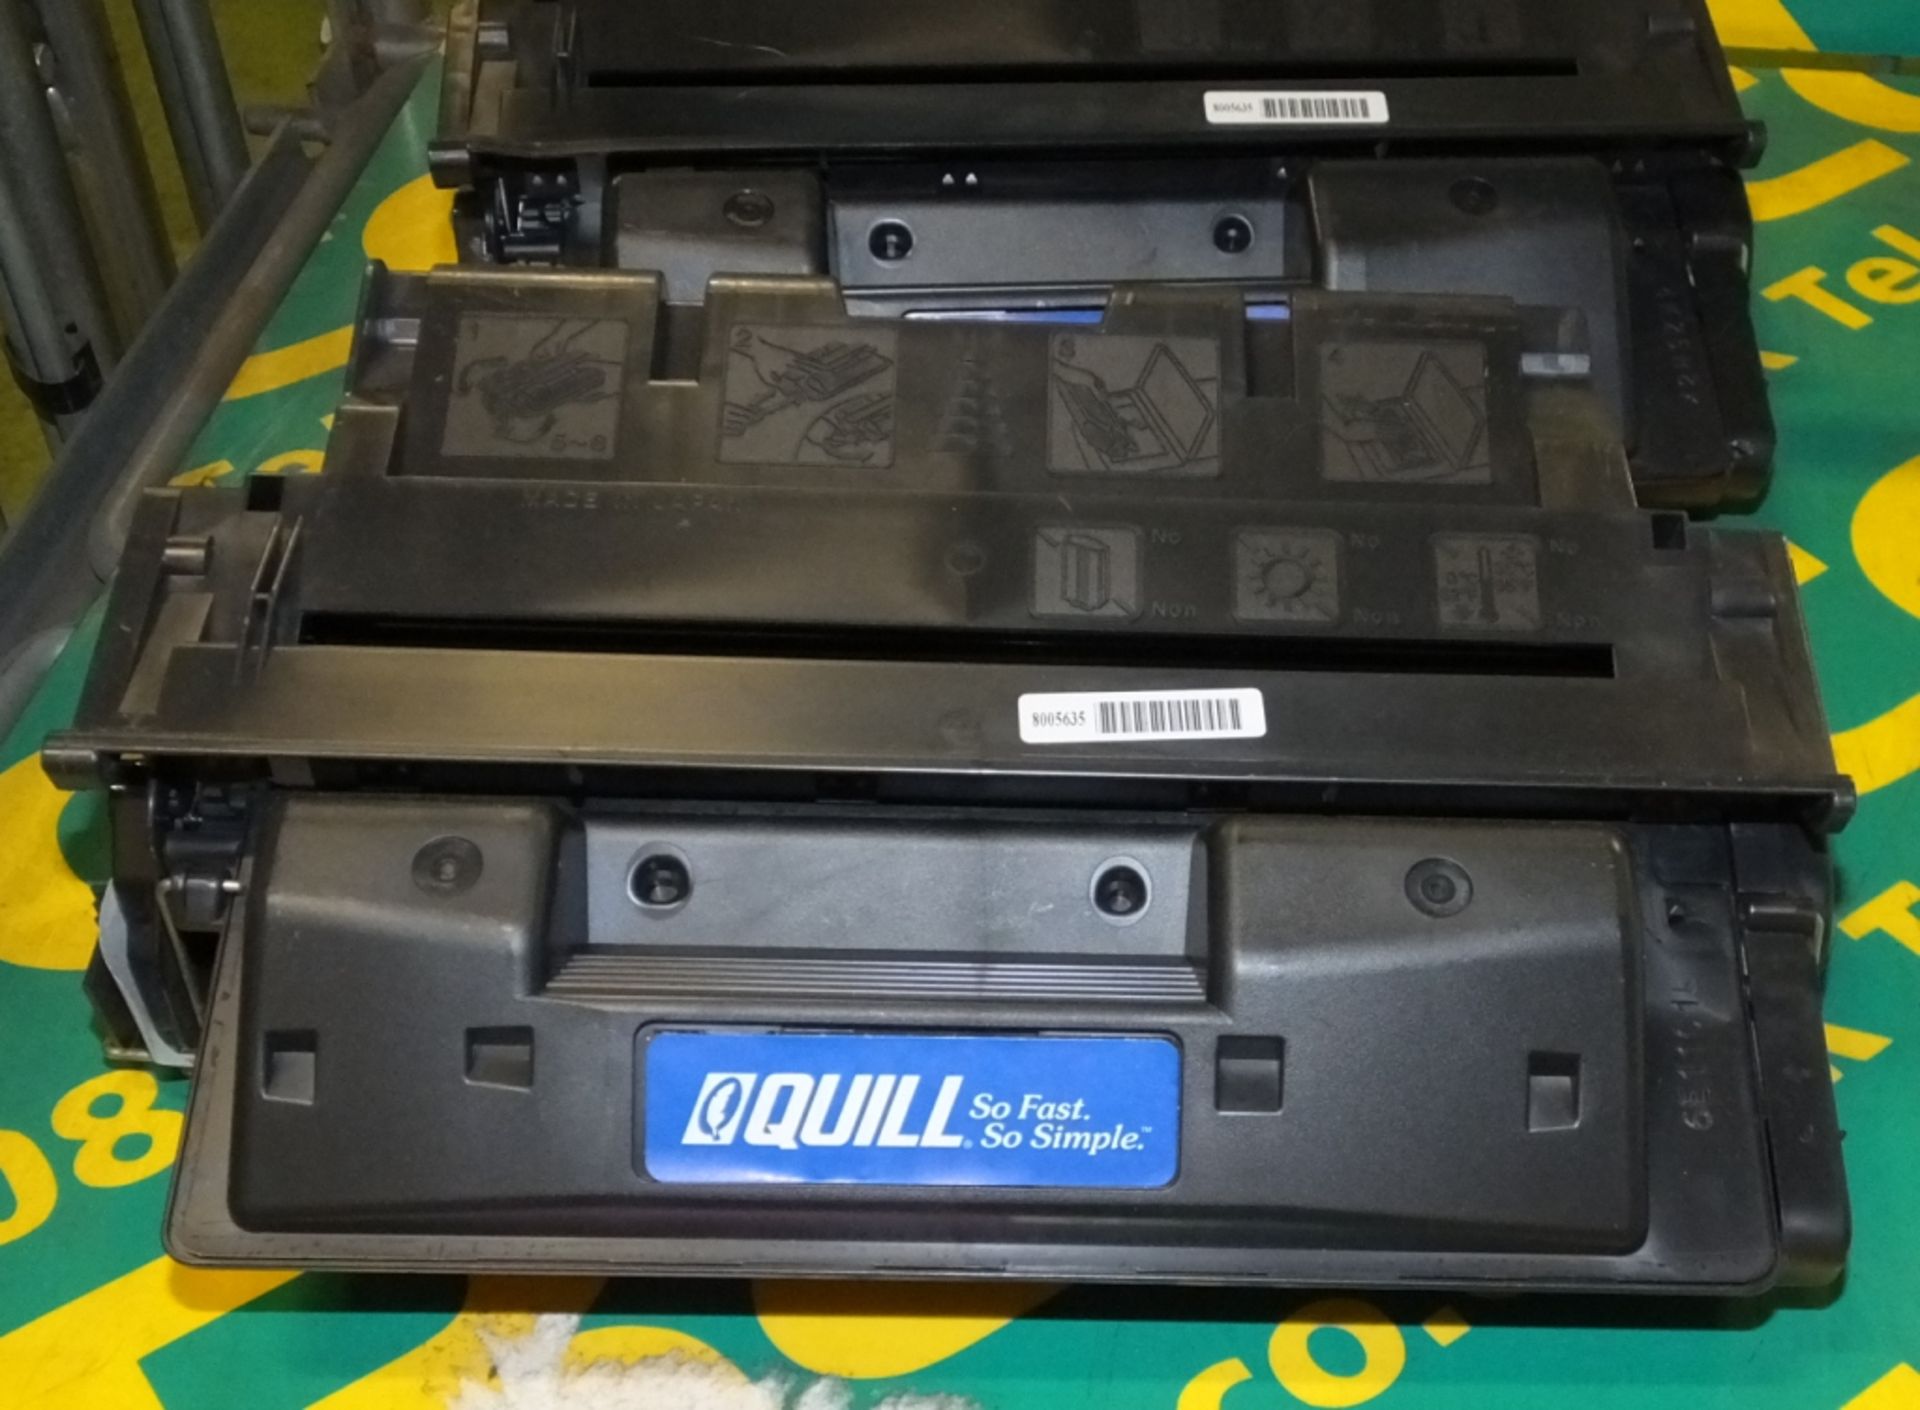 2x Quill Printer Toner Cartridges - Image 2 of 2